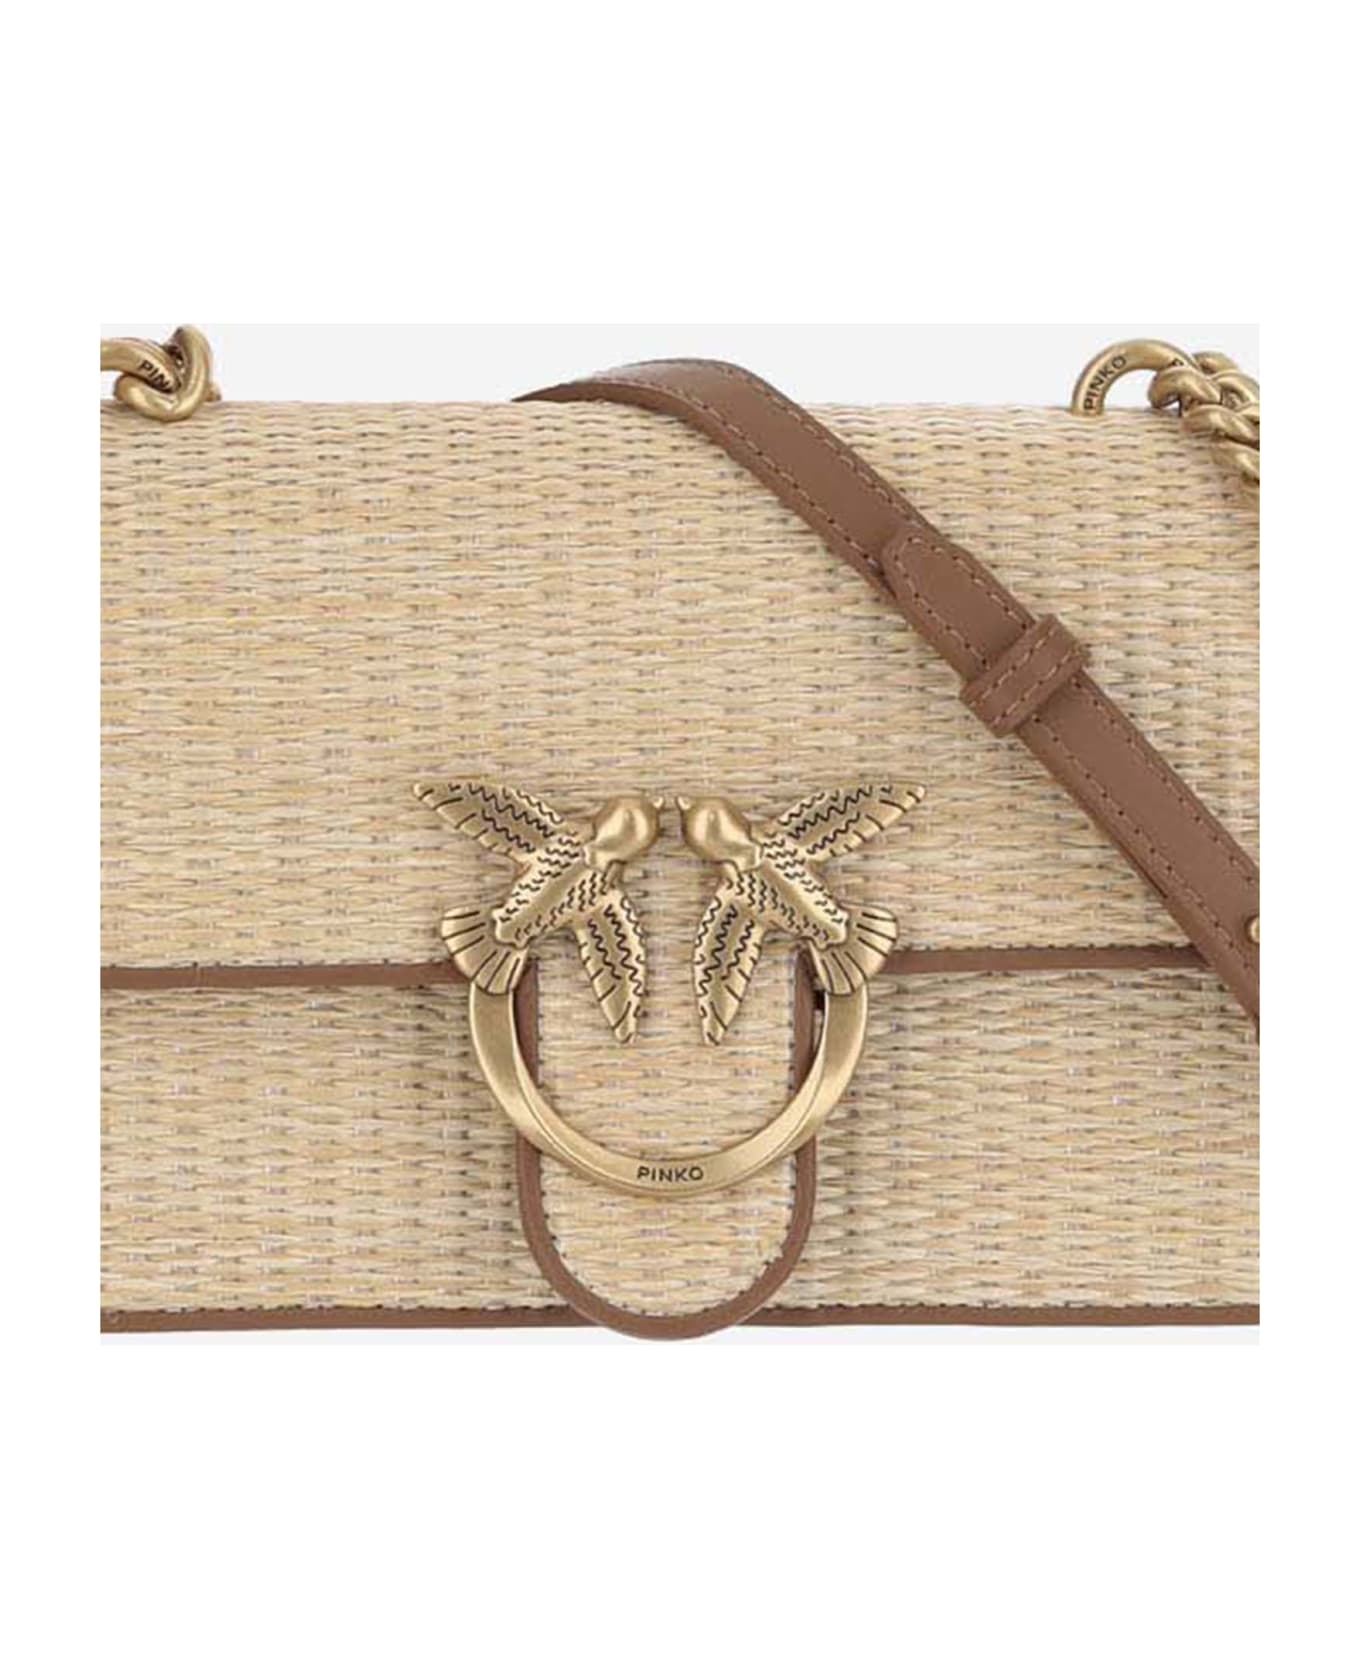 Pinko Mini Love Light Bag In Raffia And Leather - Naturale/cuoio-antique gold